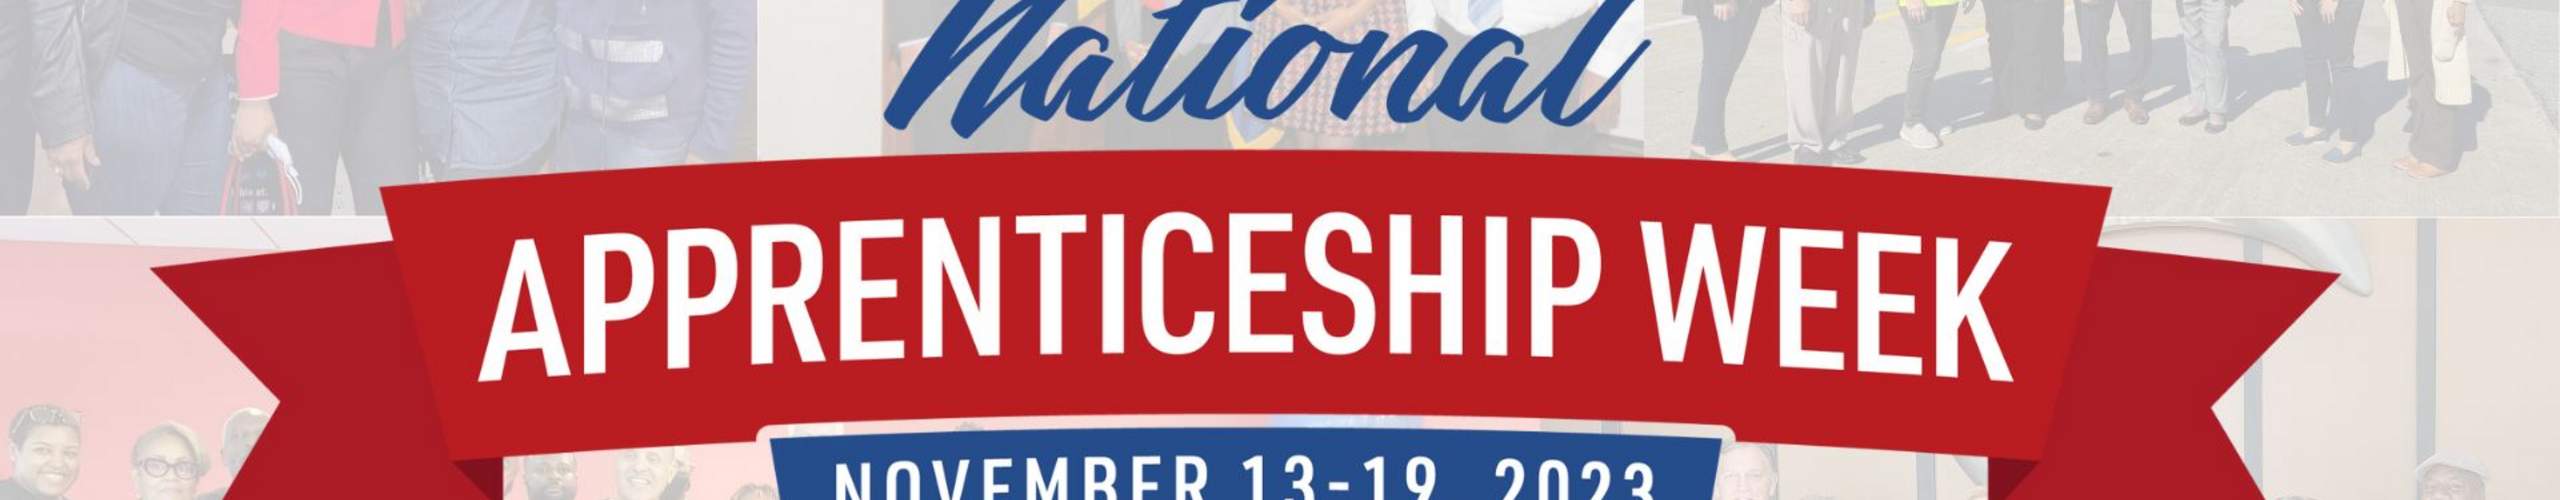 National Apprenticeship Week November 13-19, 2023